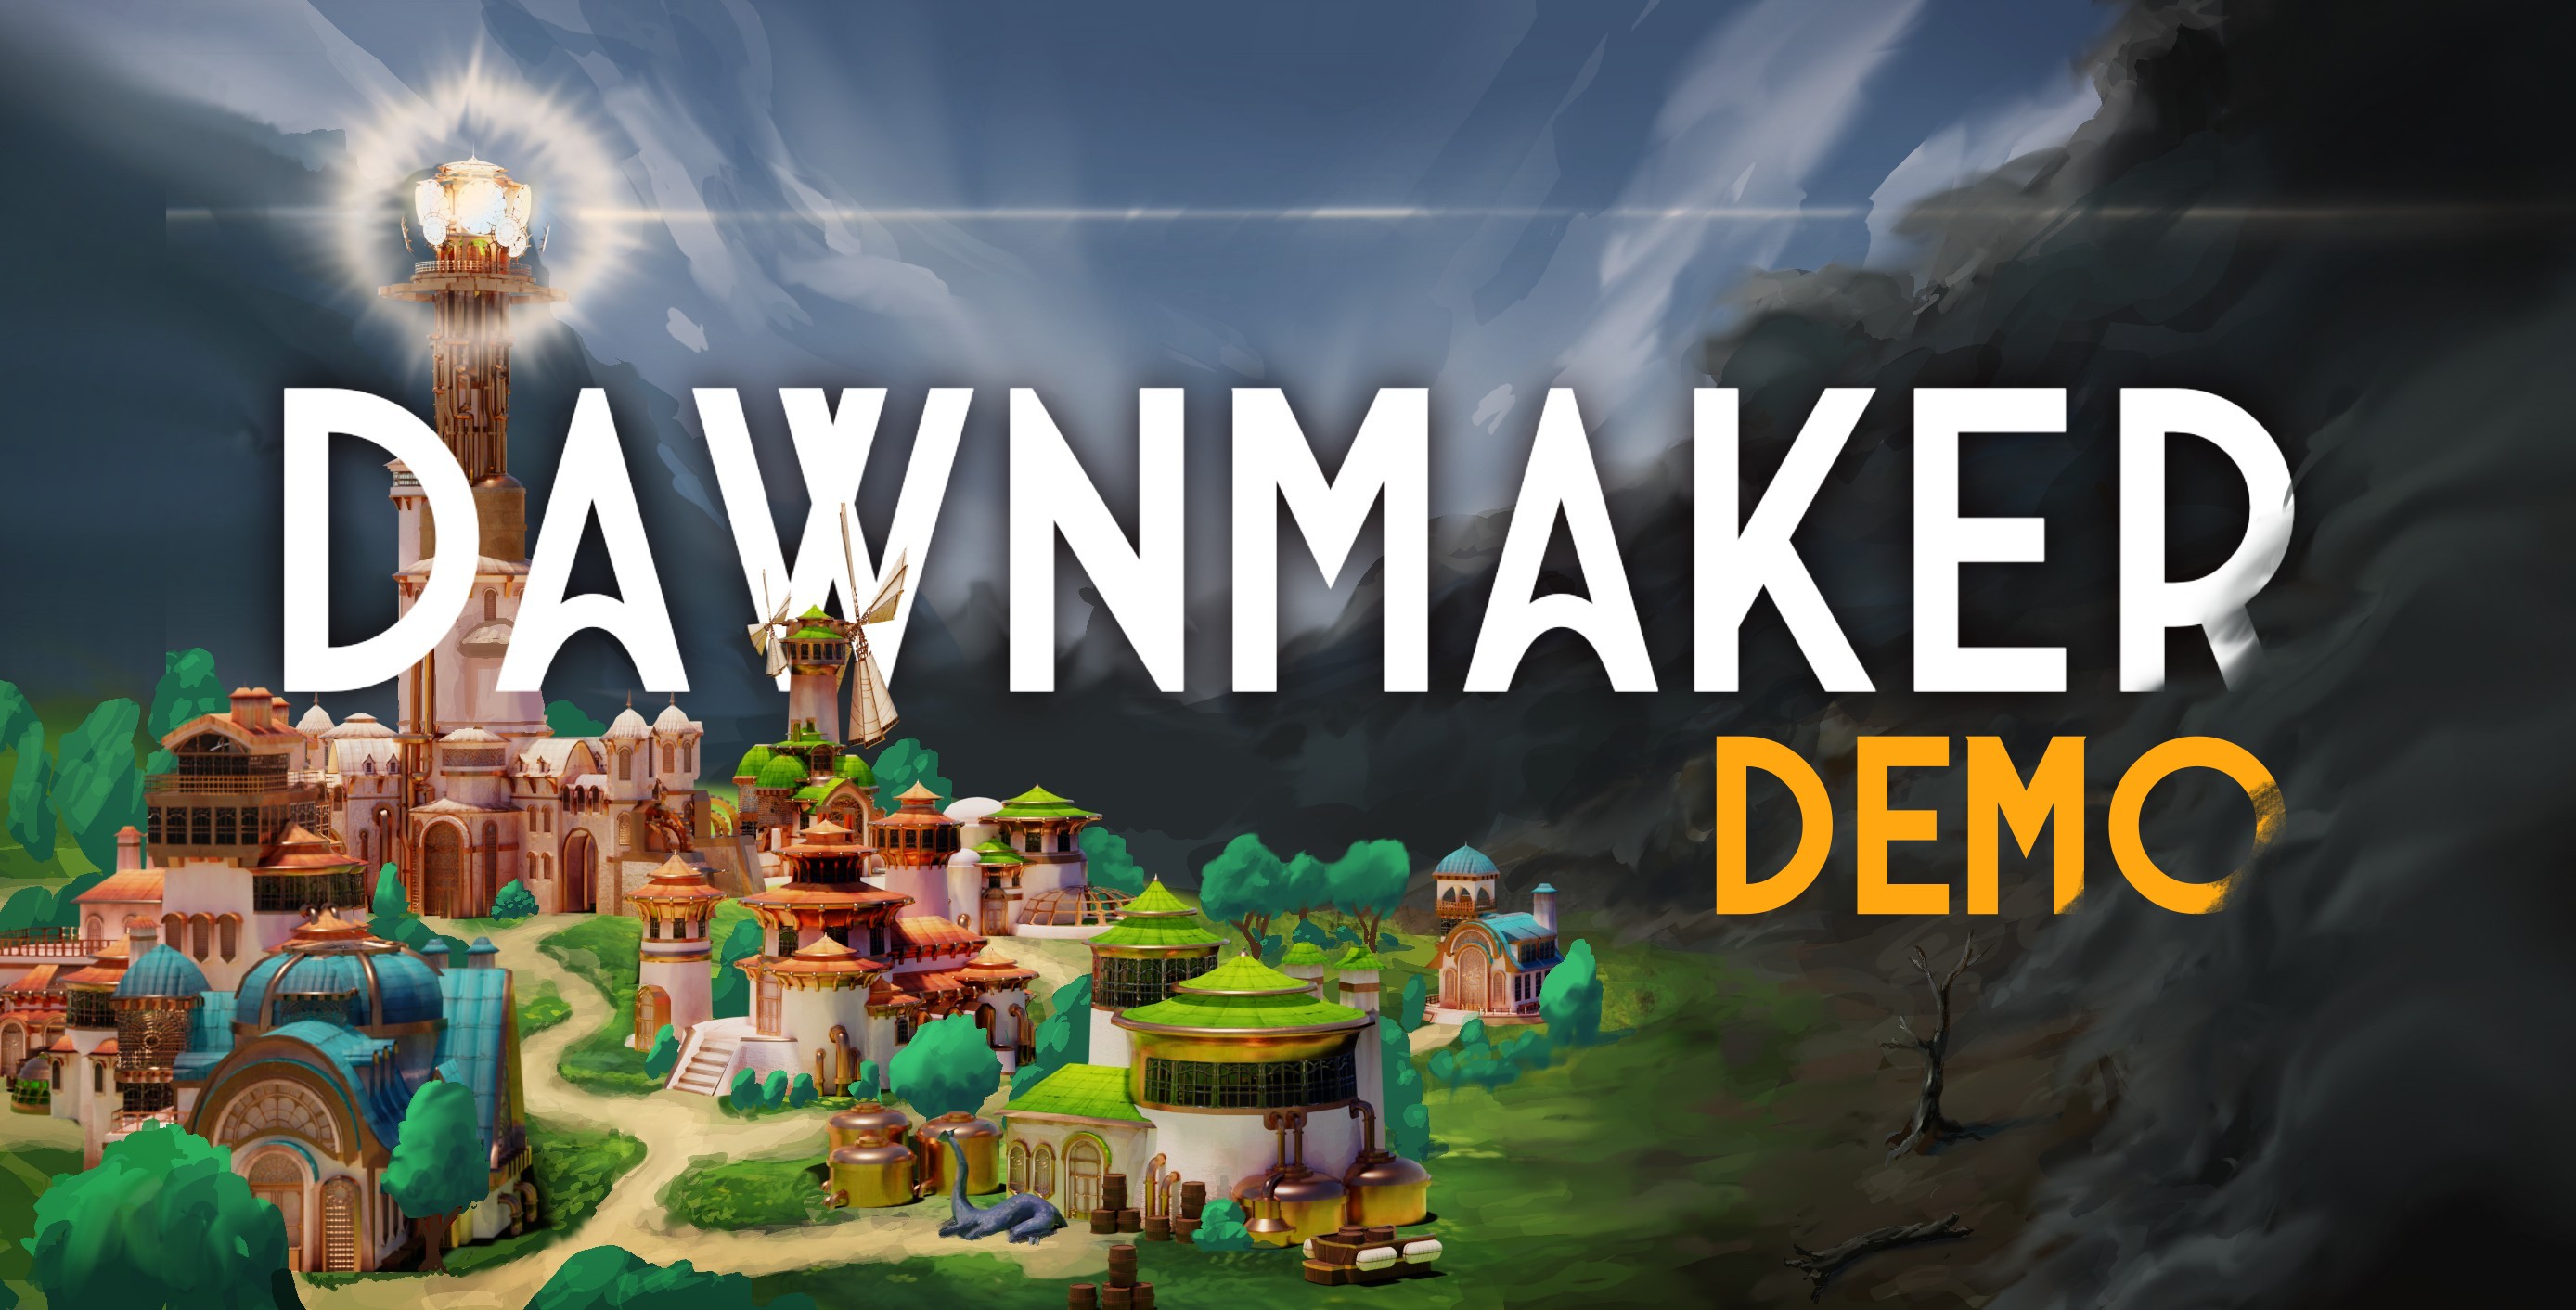 Dawnmaker Demo